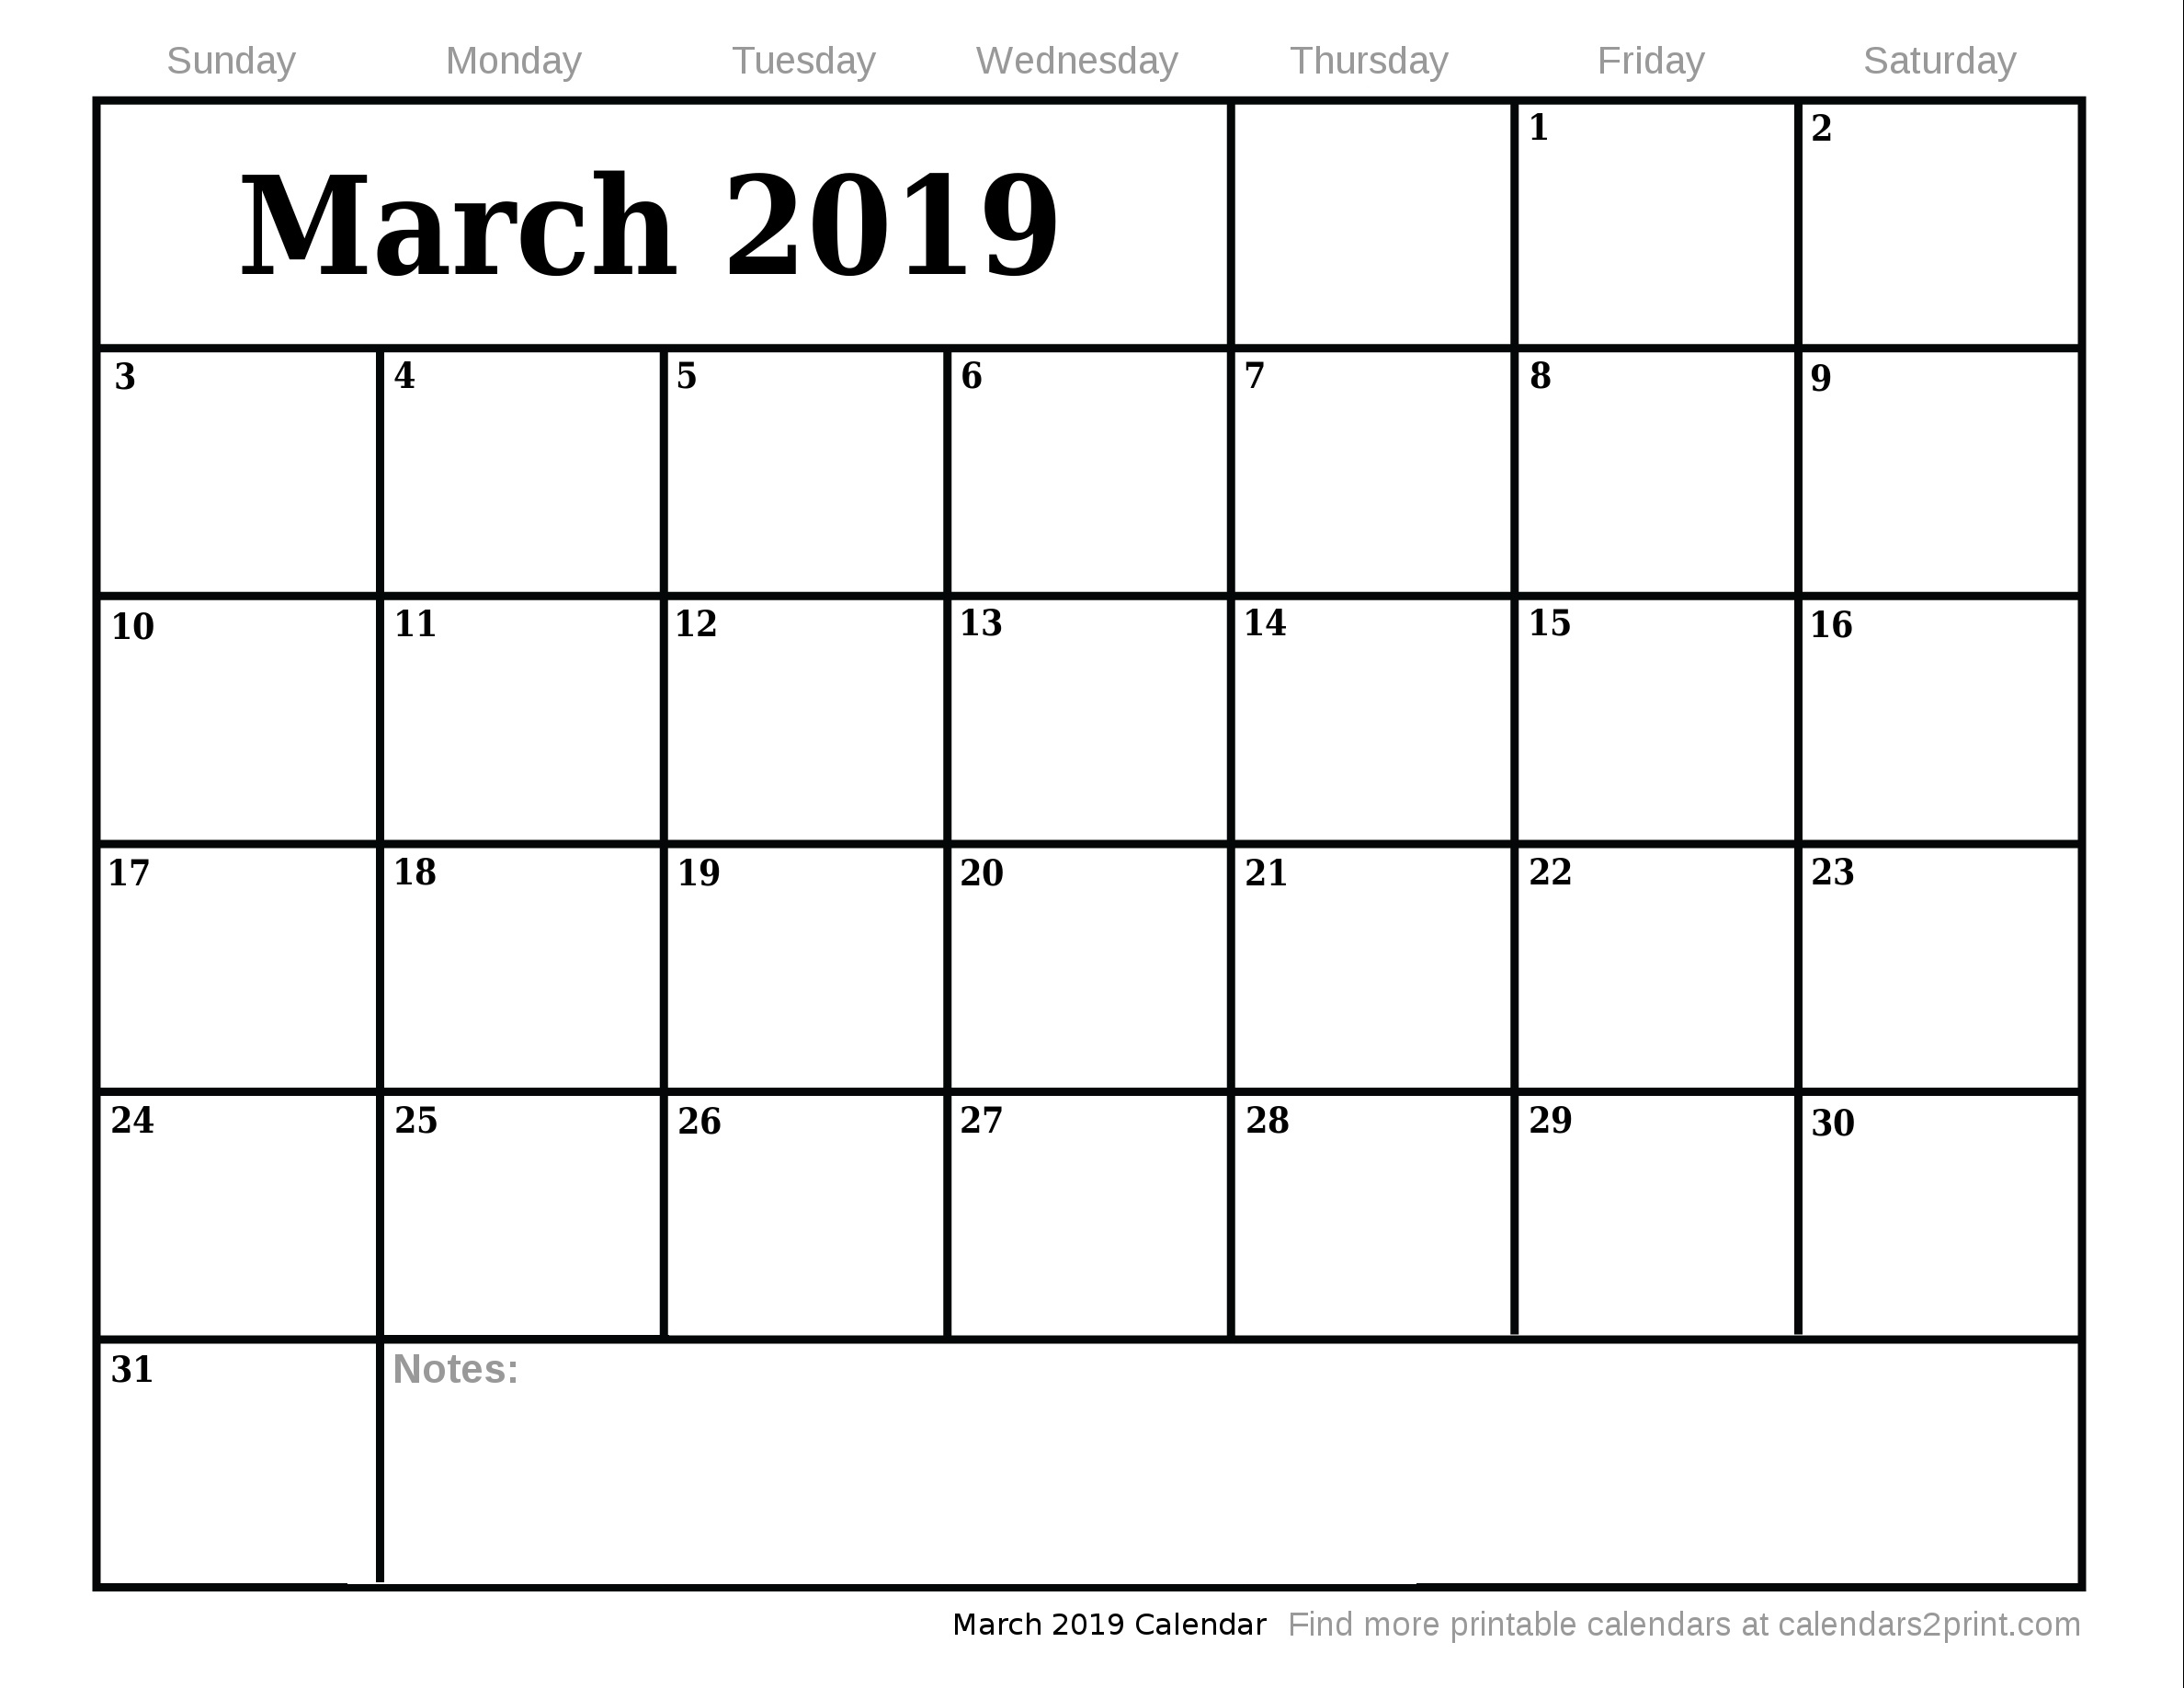 Mar 2019 Printable Calendar